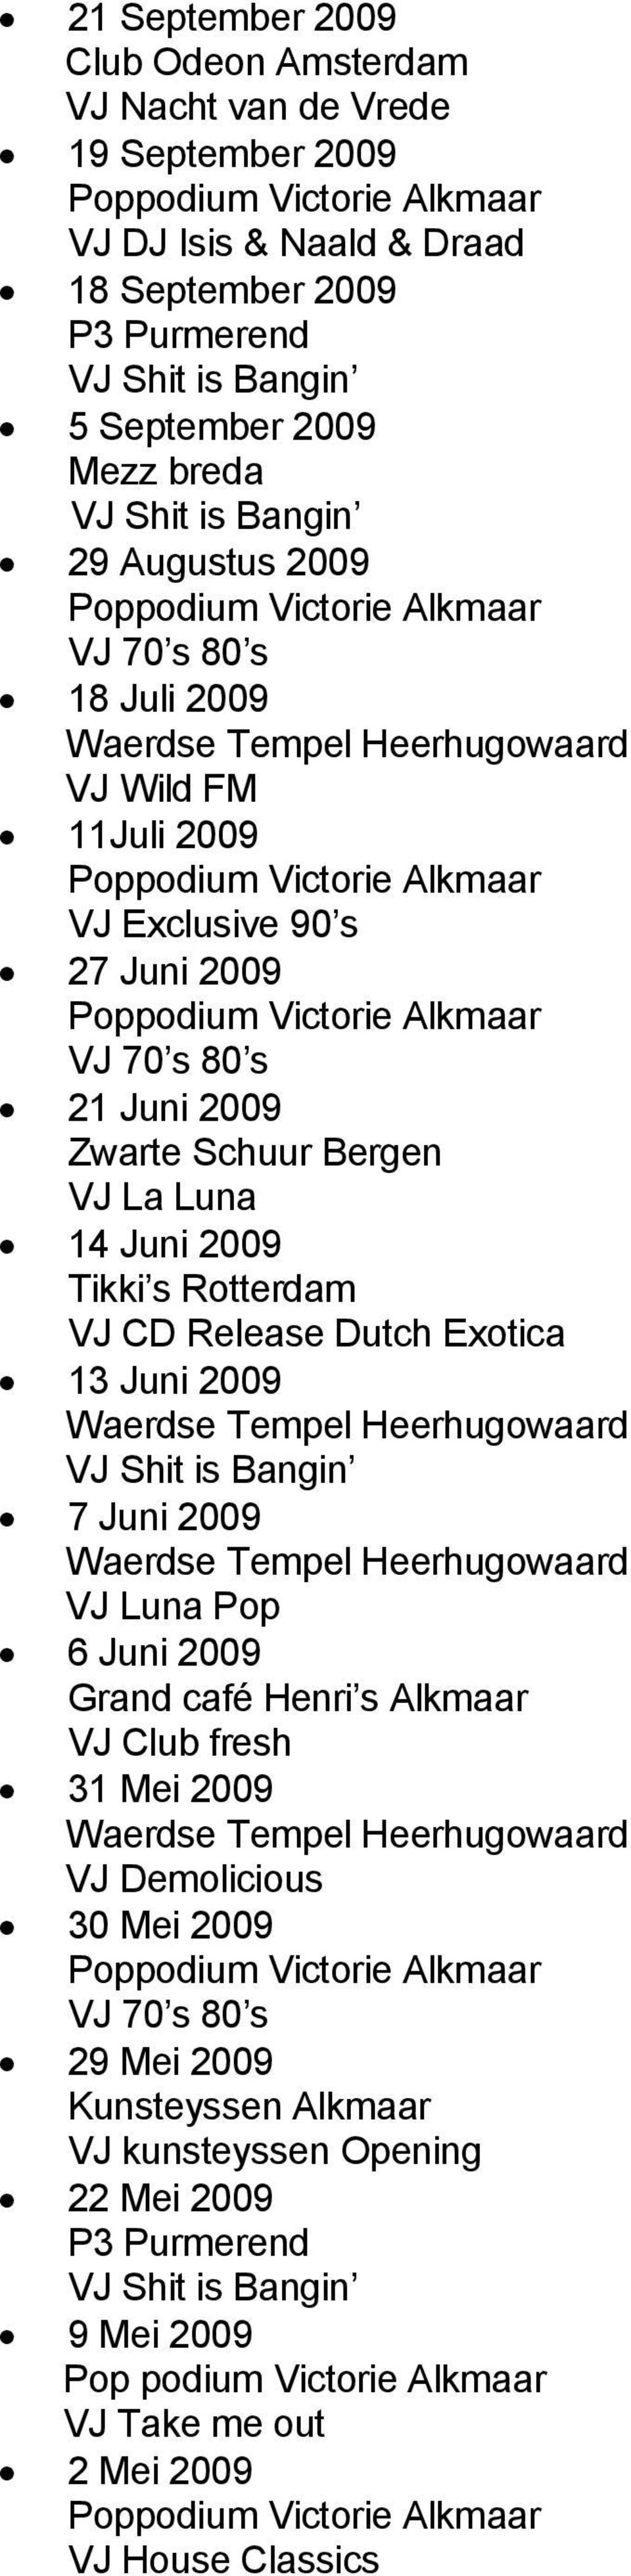 Rotterdam VJ CD Release Dutch Exotica 13 Juni 2009 7 Juni 2009 VJ Luna Pop 6 Juni 2009 Grand café Henri s Alkmaar VJ Club fresh 31 Mei 2009 VJ Demolicious 30 Mei 2009